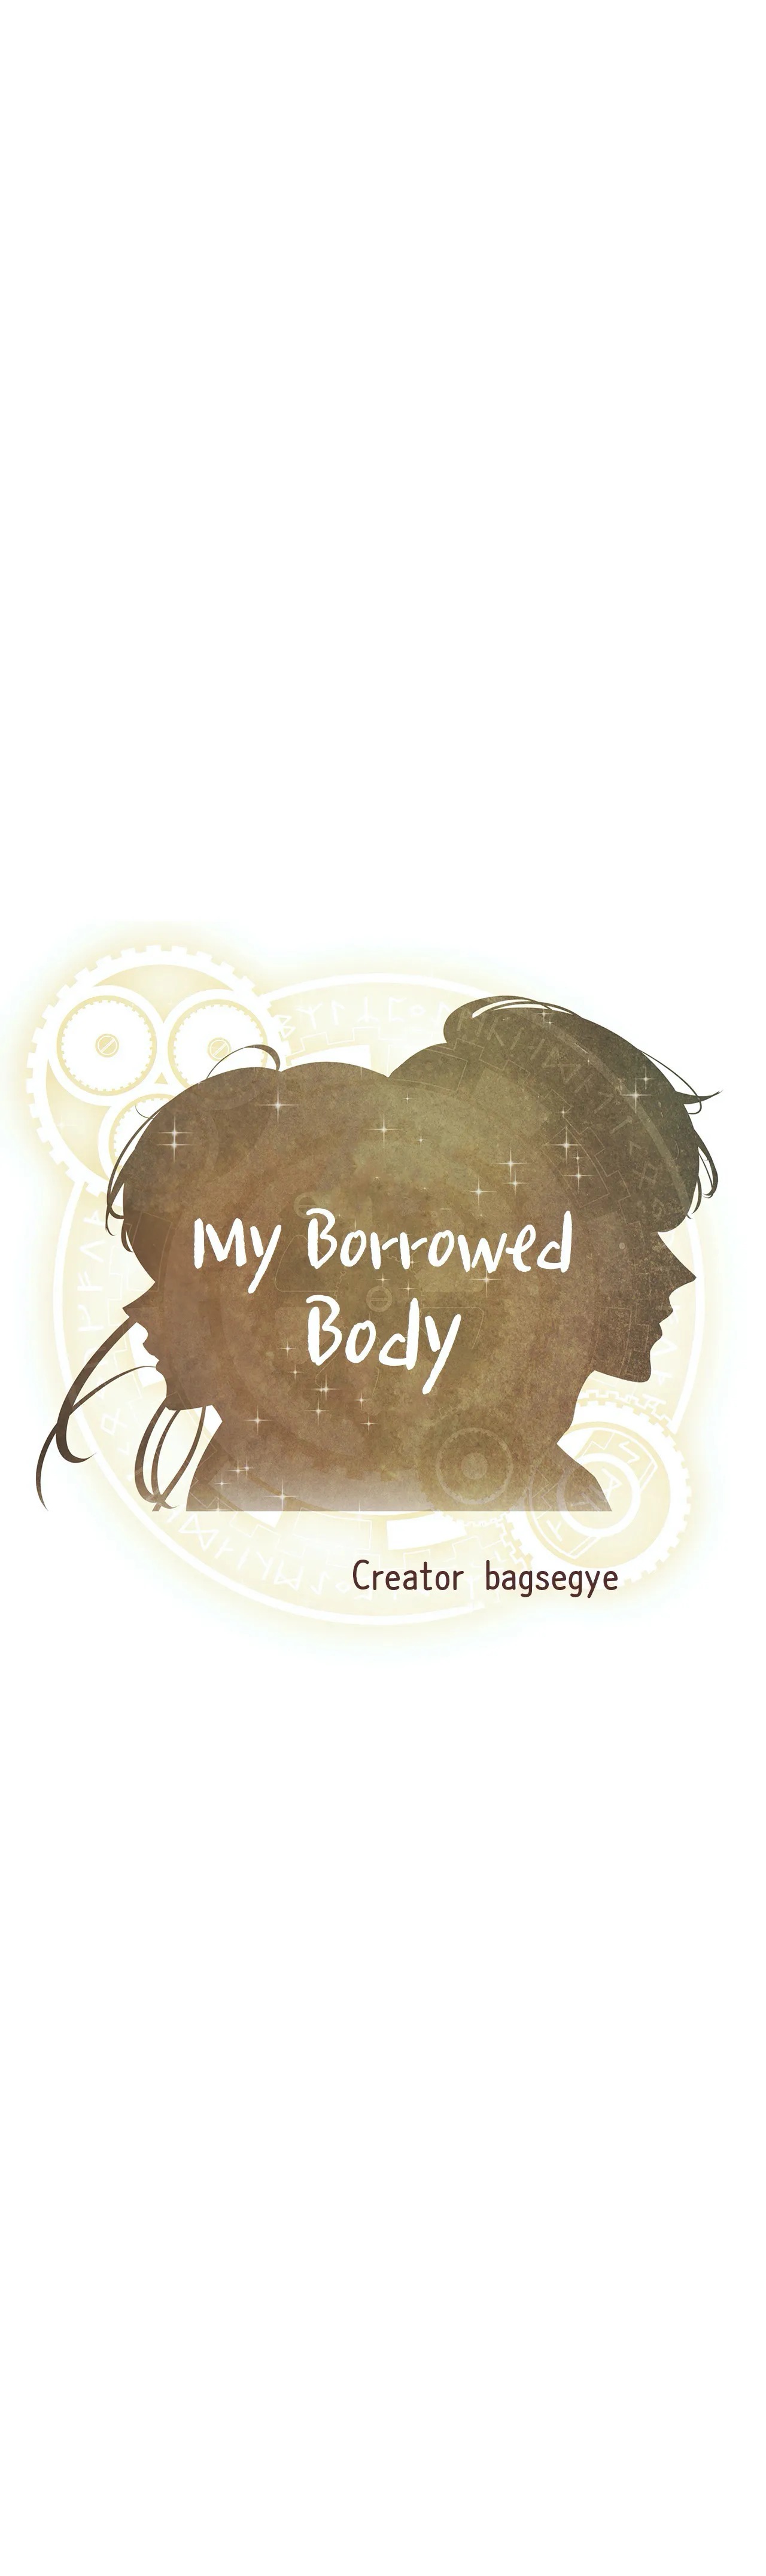 My Borrowed Body - Page 1